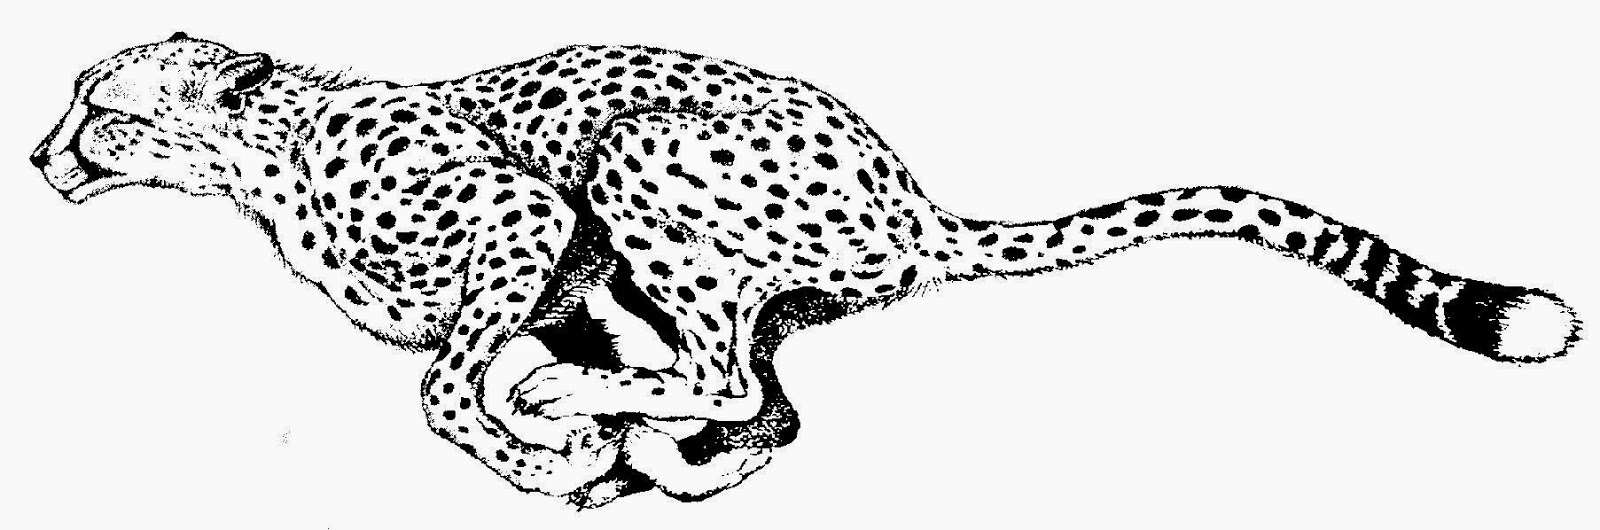 Cheetah print black and white clipart kid